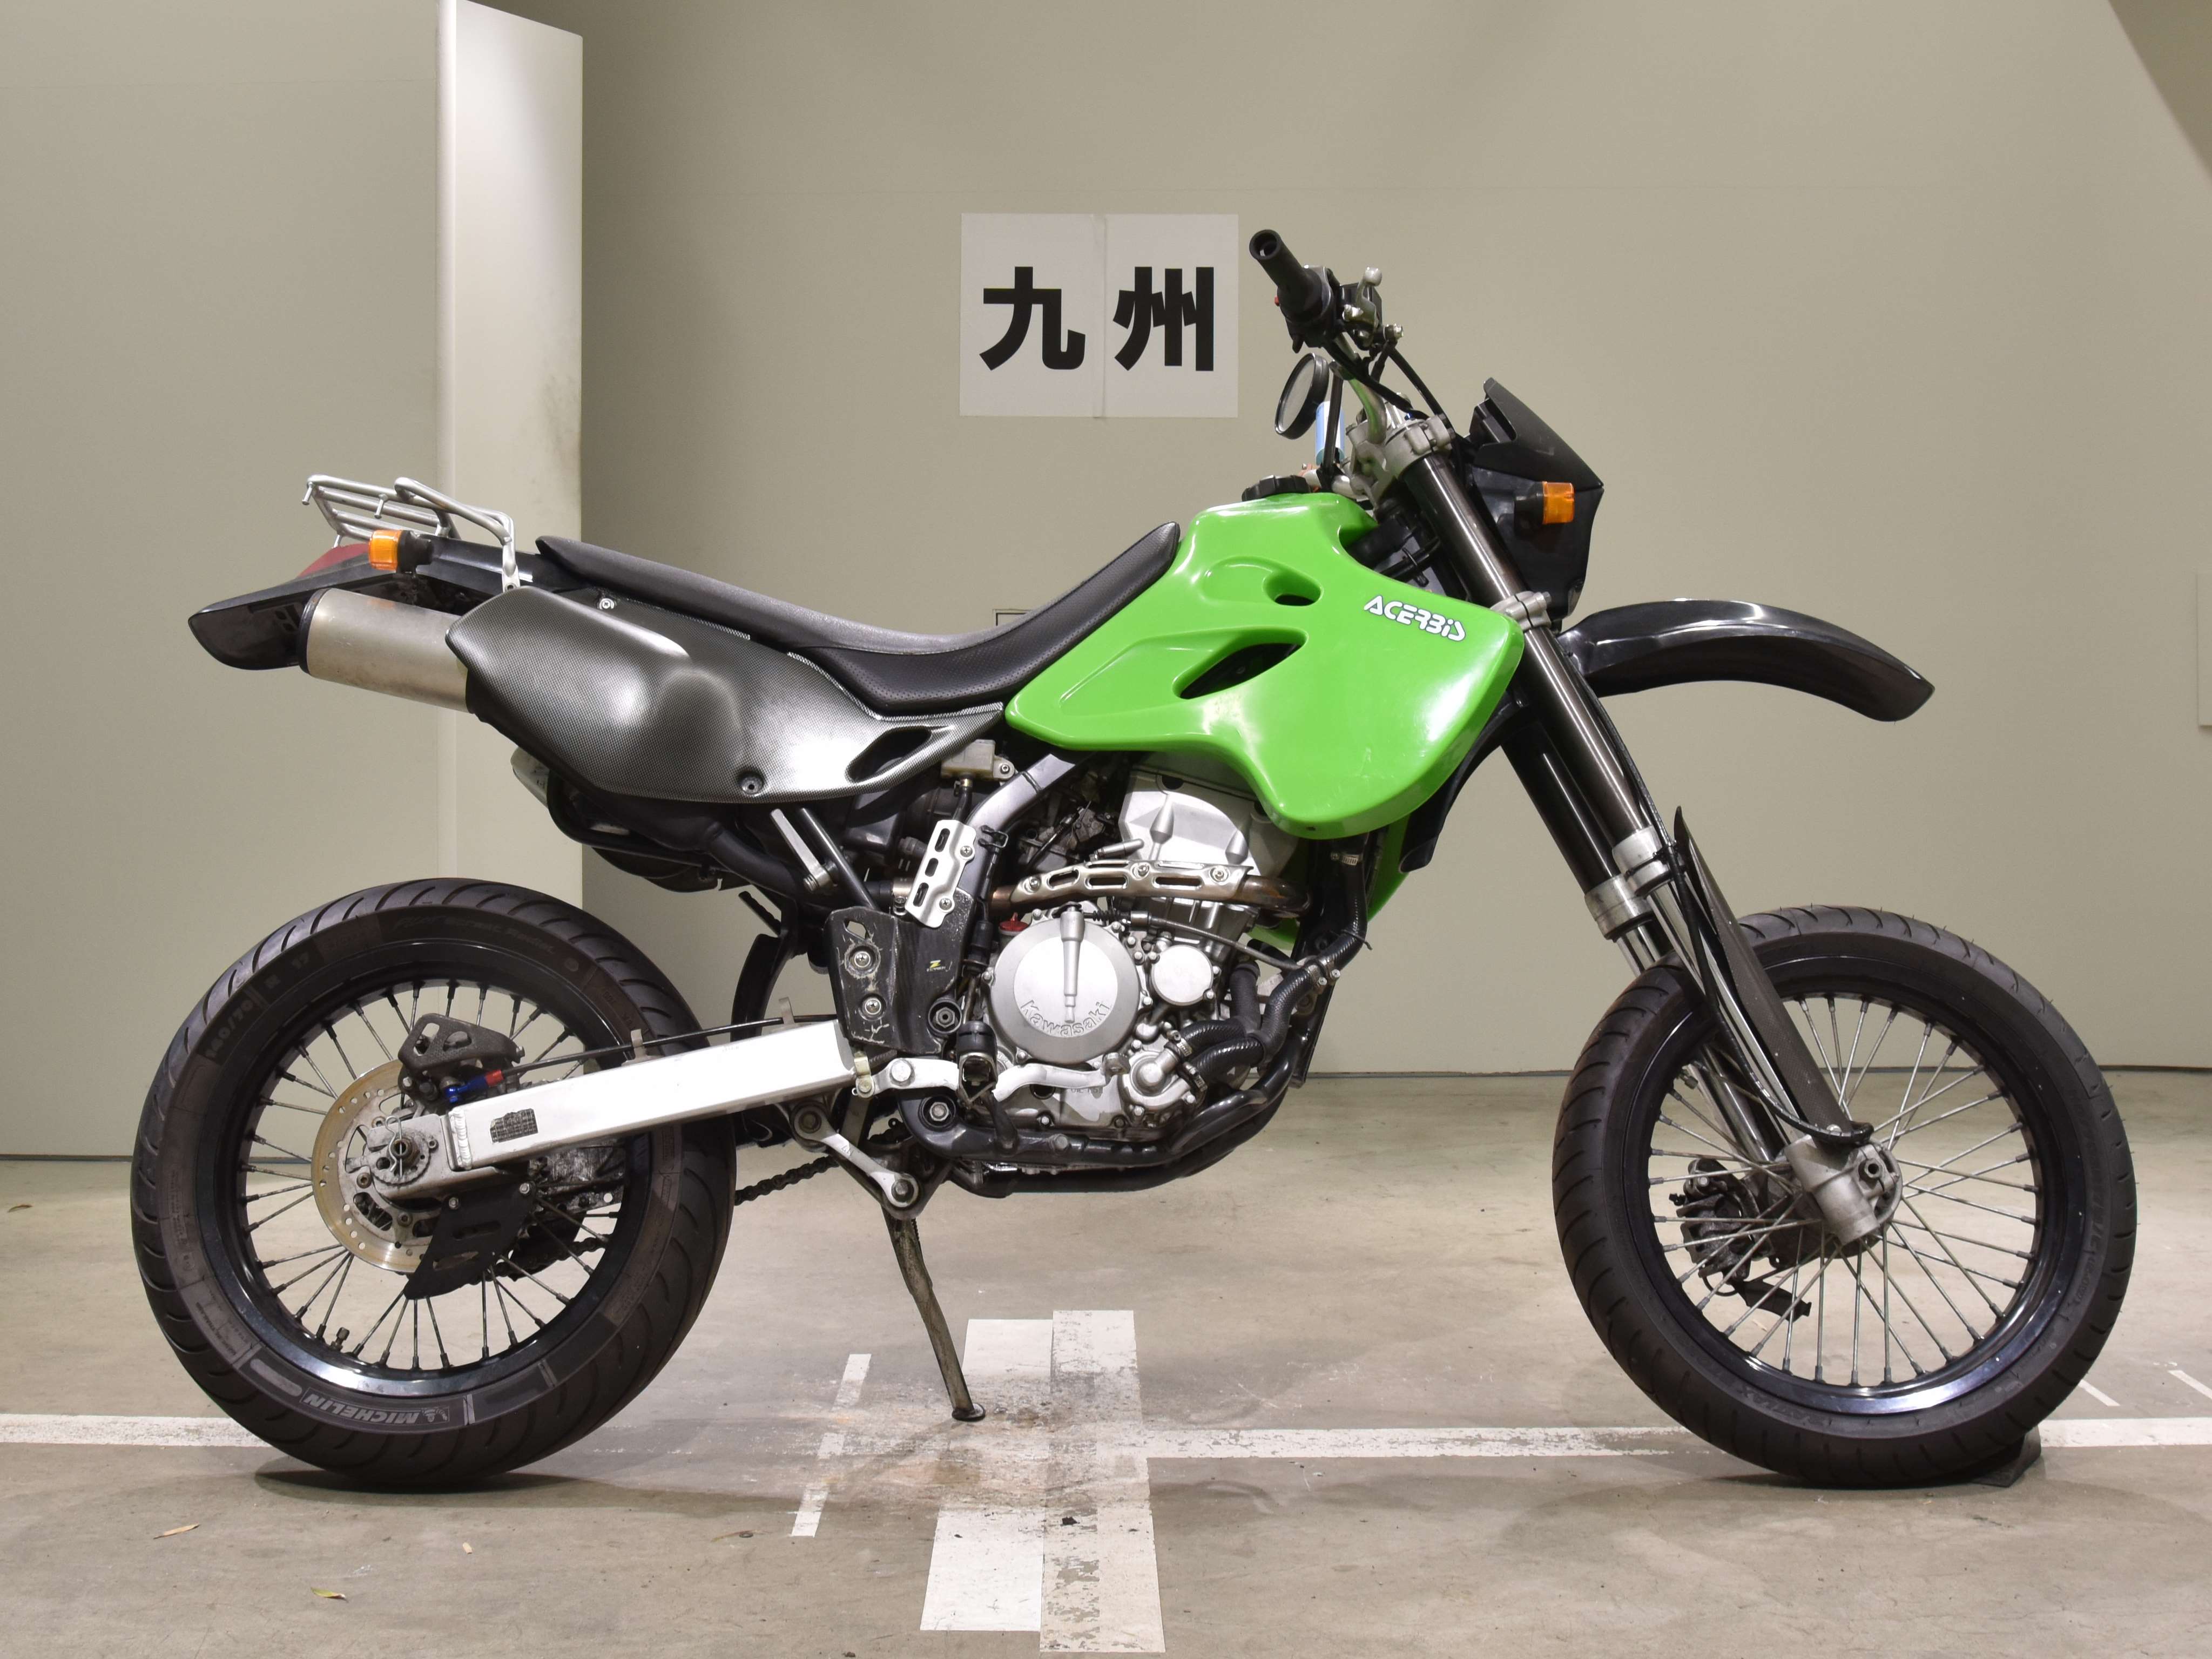 Kawasaki z 250 и ninja 250: в чем отличие моделей? мото статья на jcnews.ru